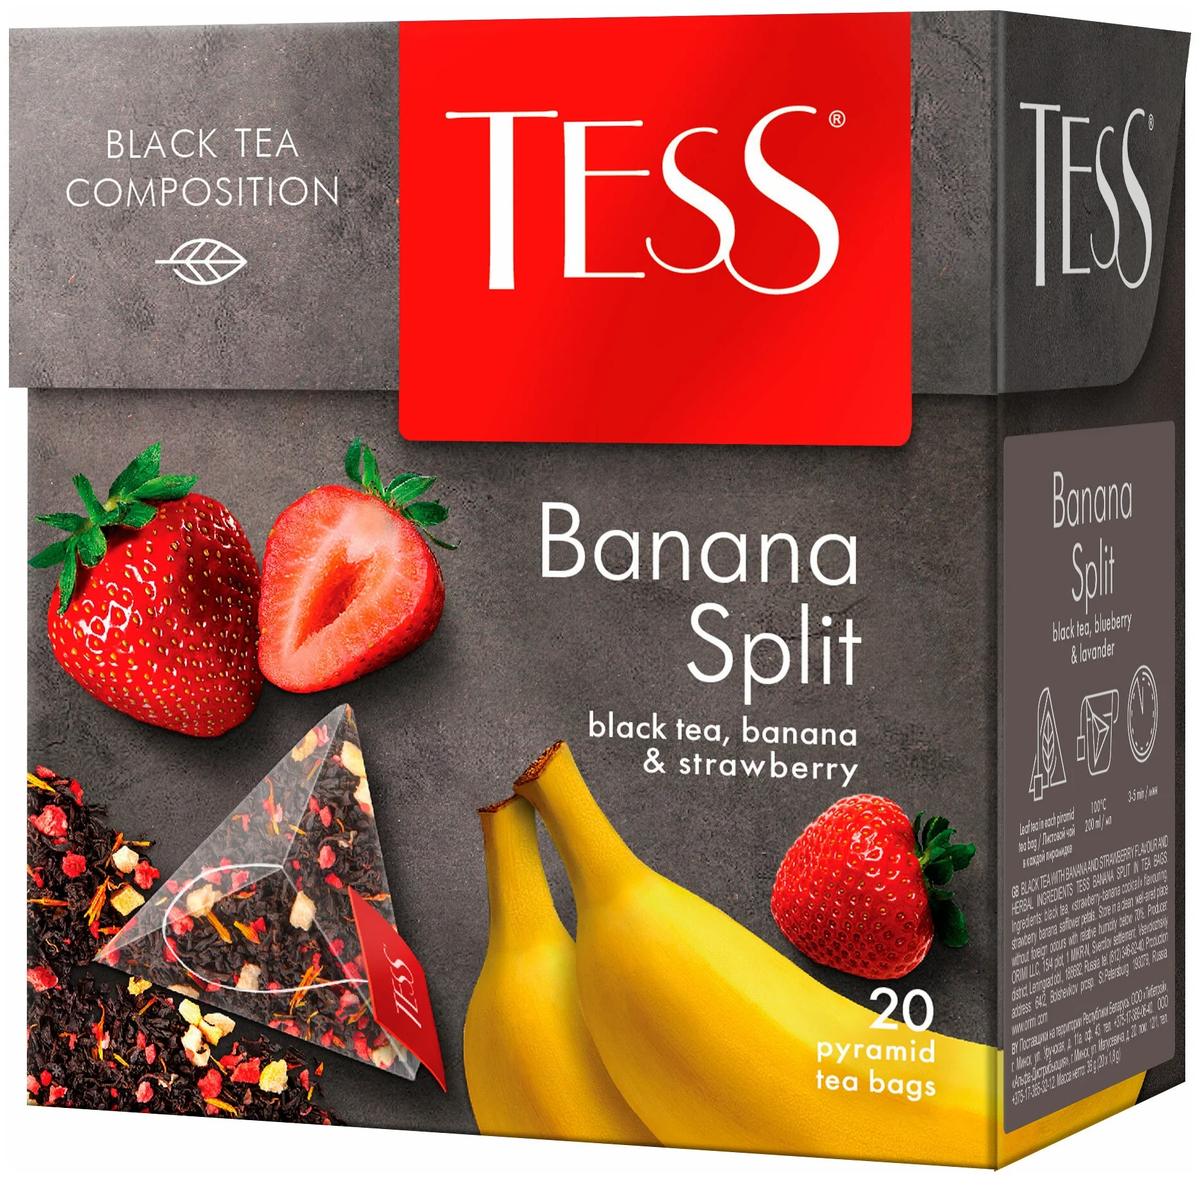 TesS Banana Split.